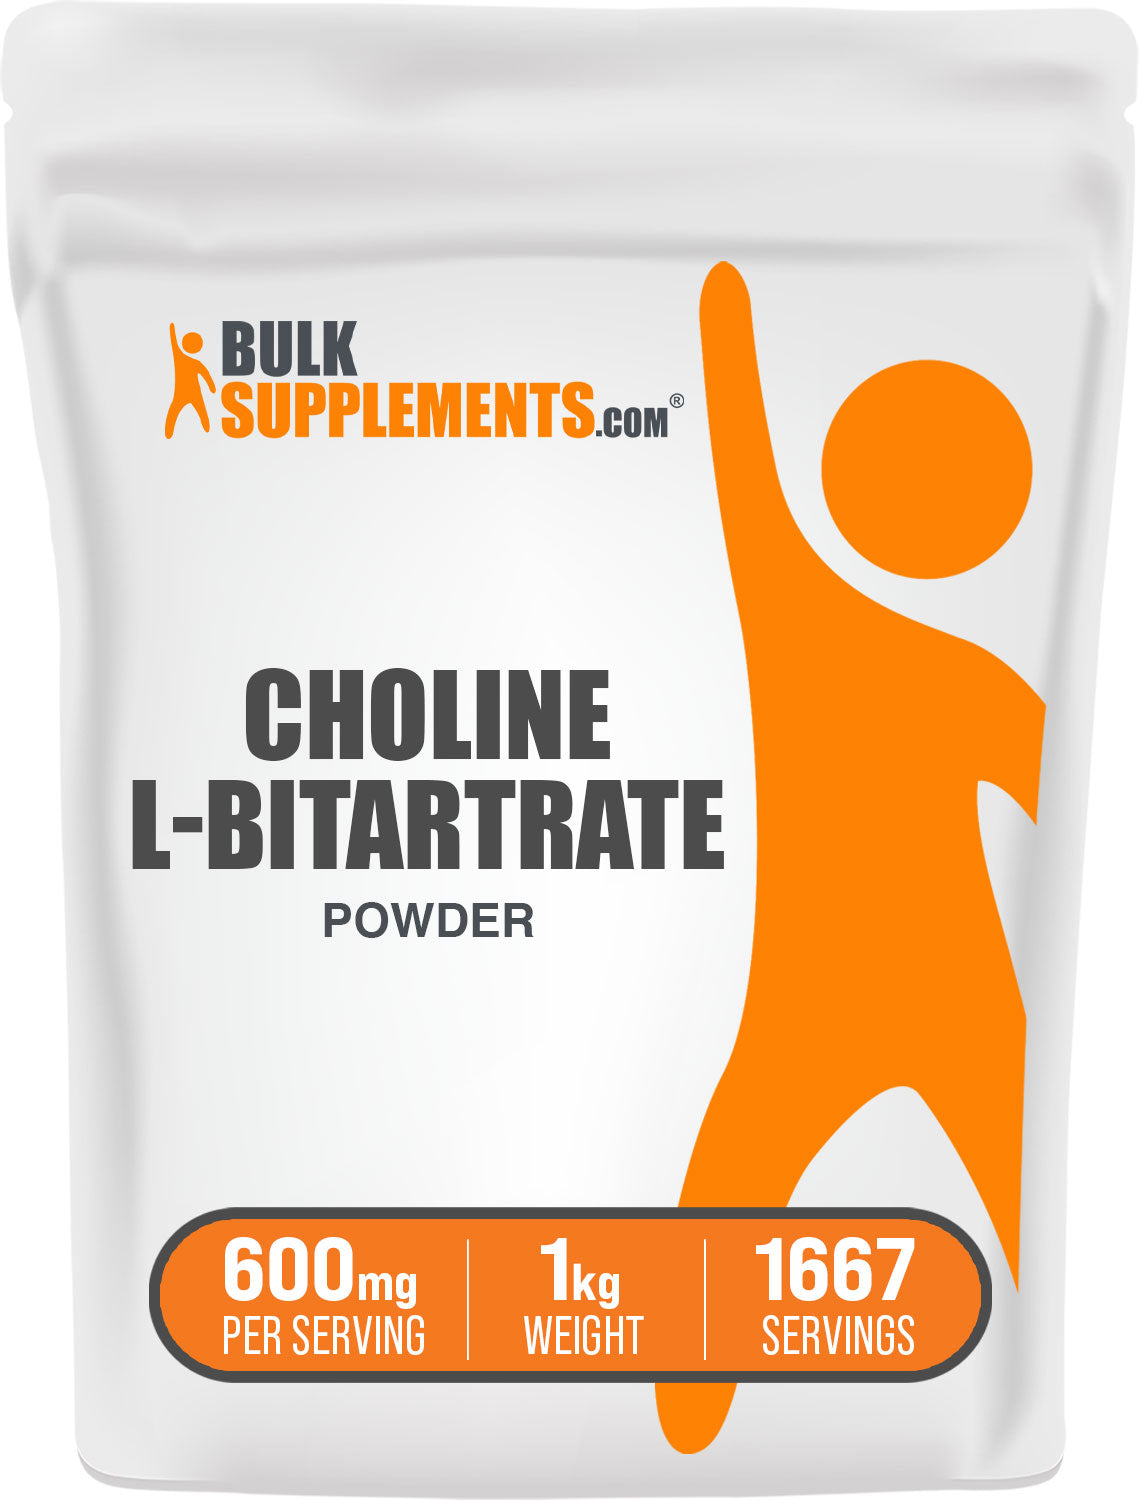 1kg choline supplements